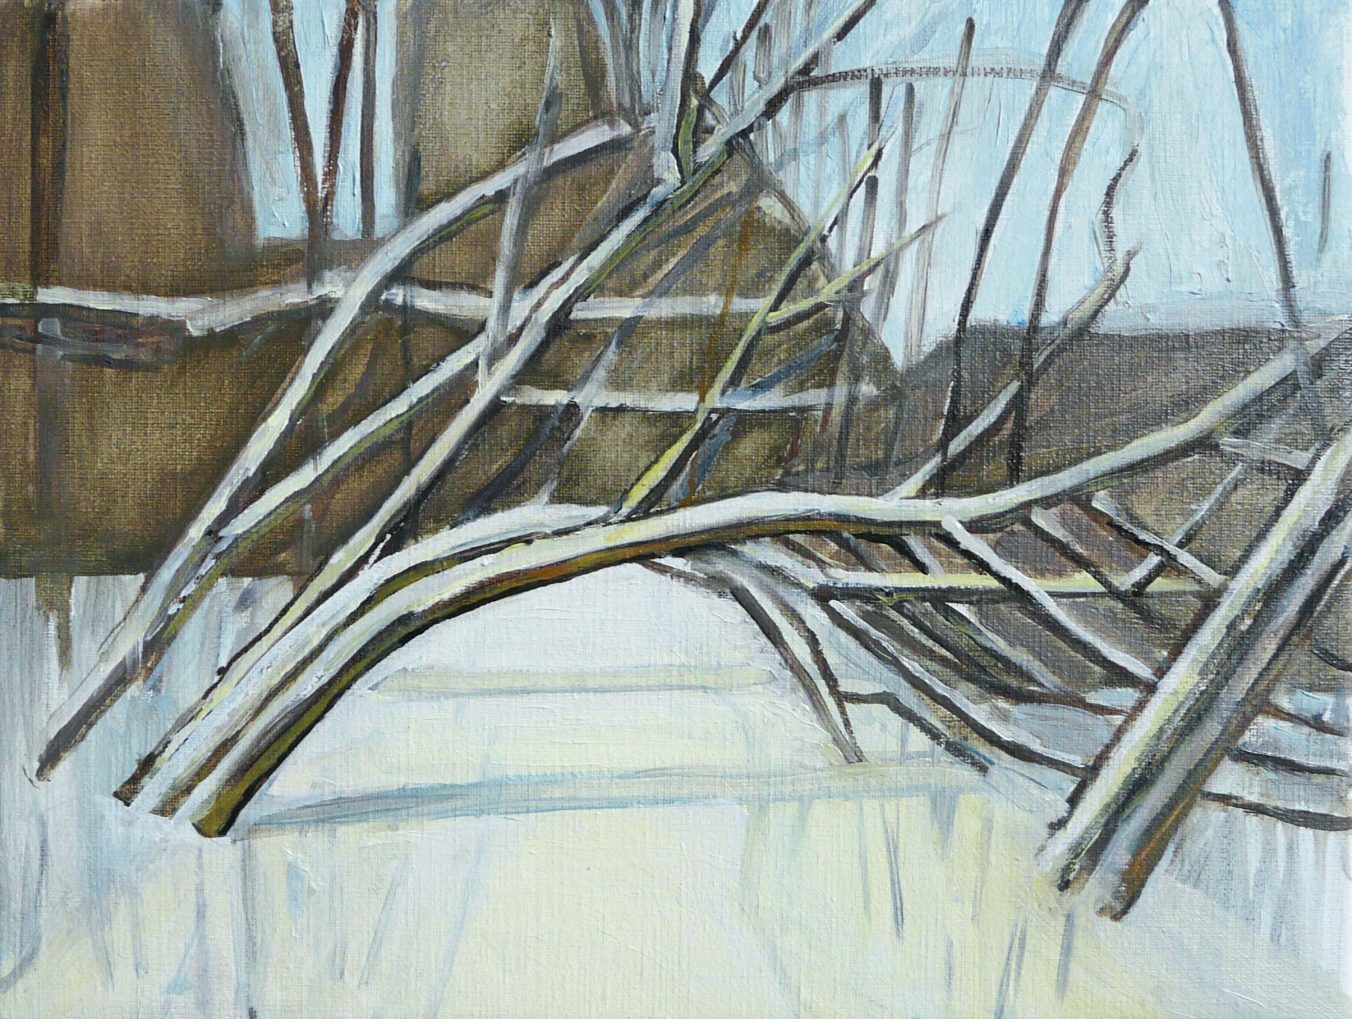 Riverside winter 4, 2016. Oil, canvas. 30 x 40 cm